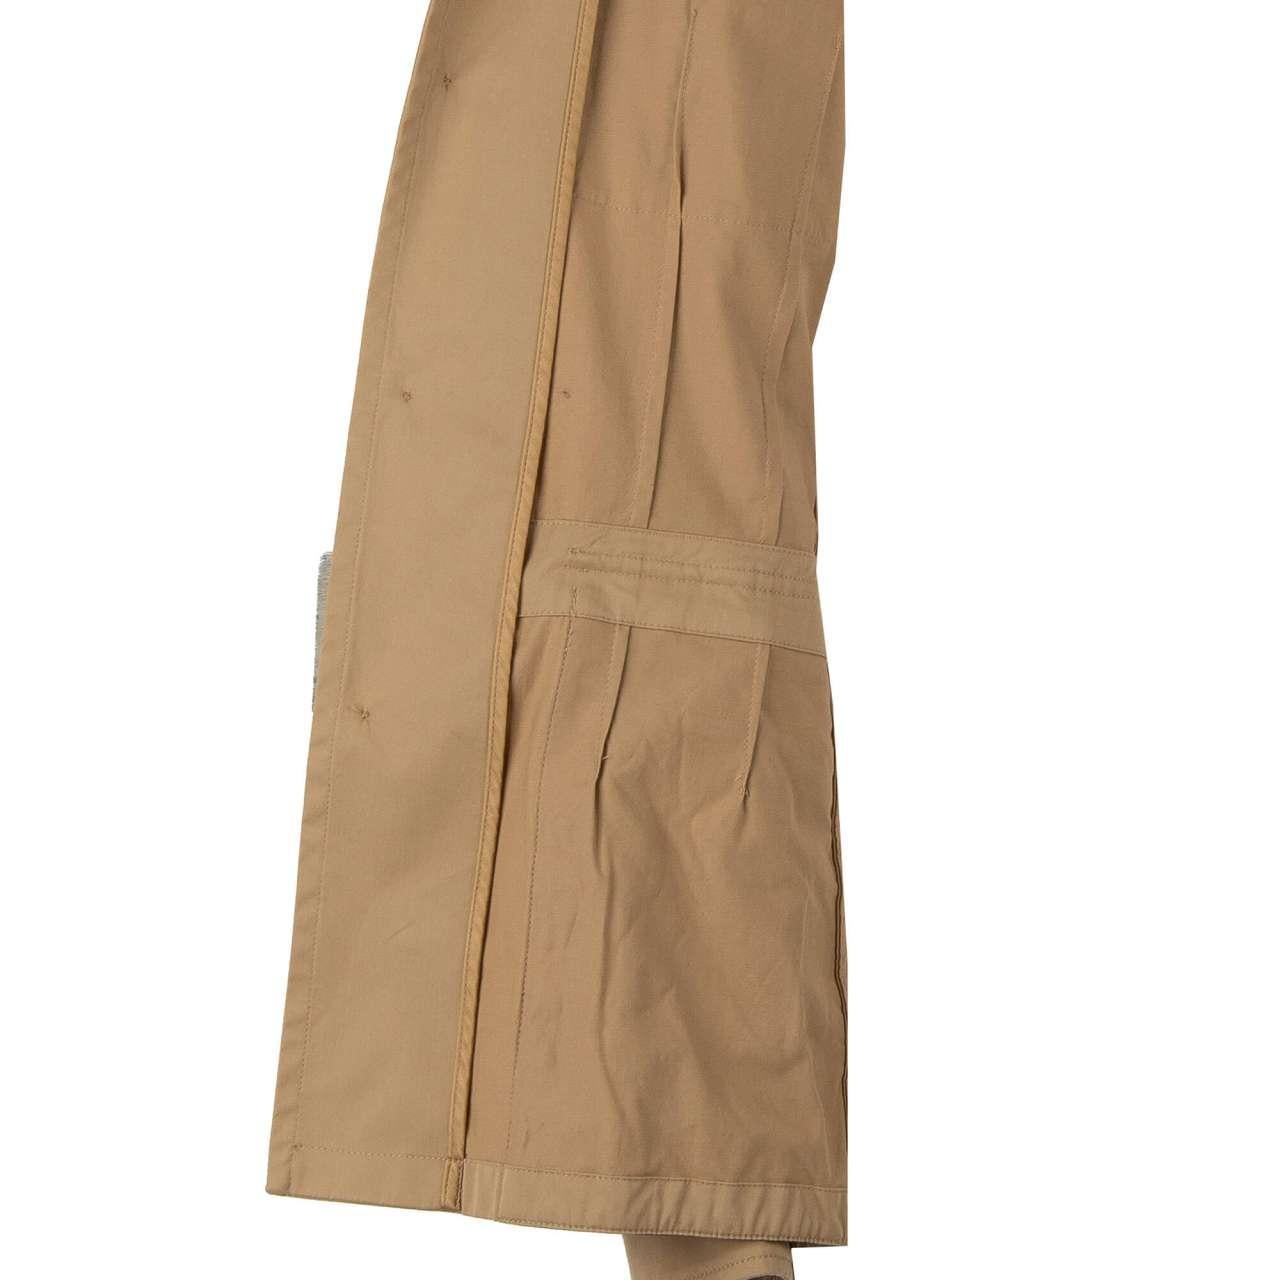 Dolce & Gabbana Canvas Safari Jacket SNEAK PEEK with Belt and Pockets Beige 46 For Sale 4